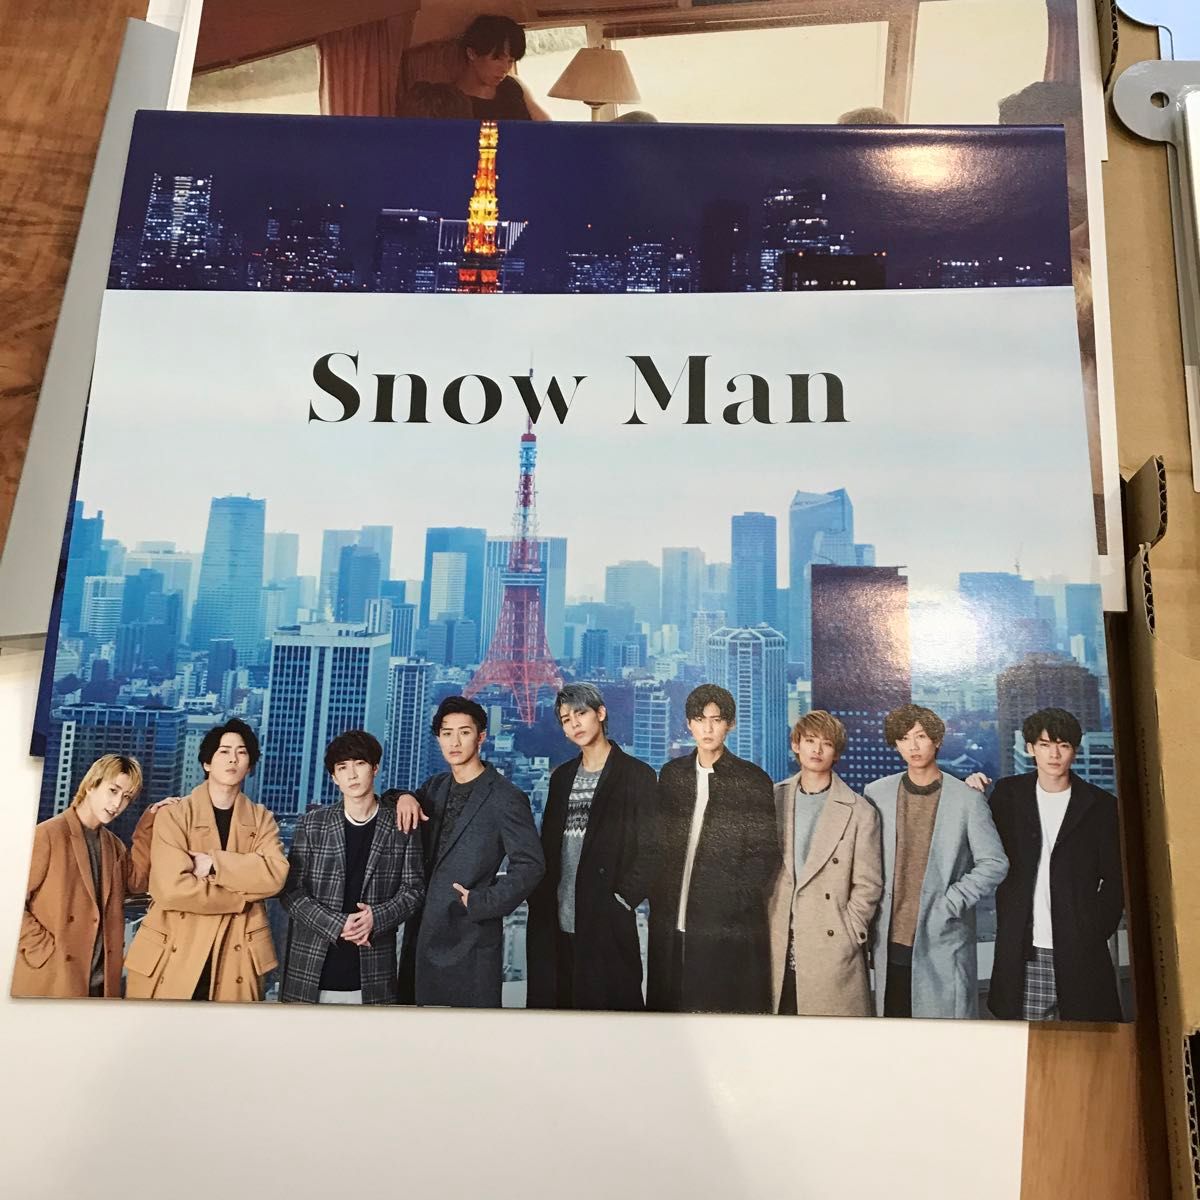 Snow Man カレンダー 2021.4-2022.3 Johnnys Official